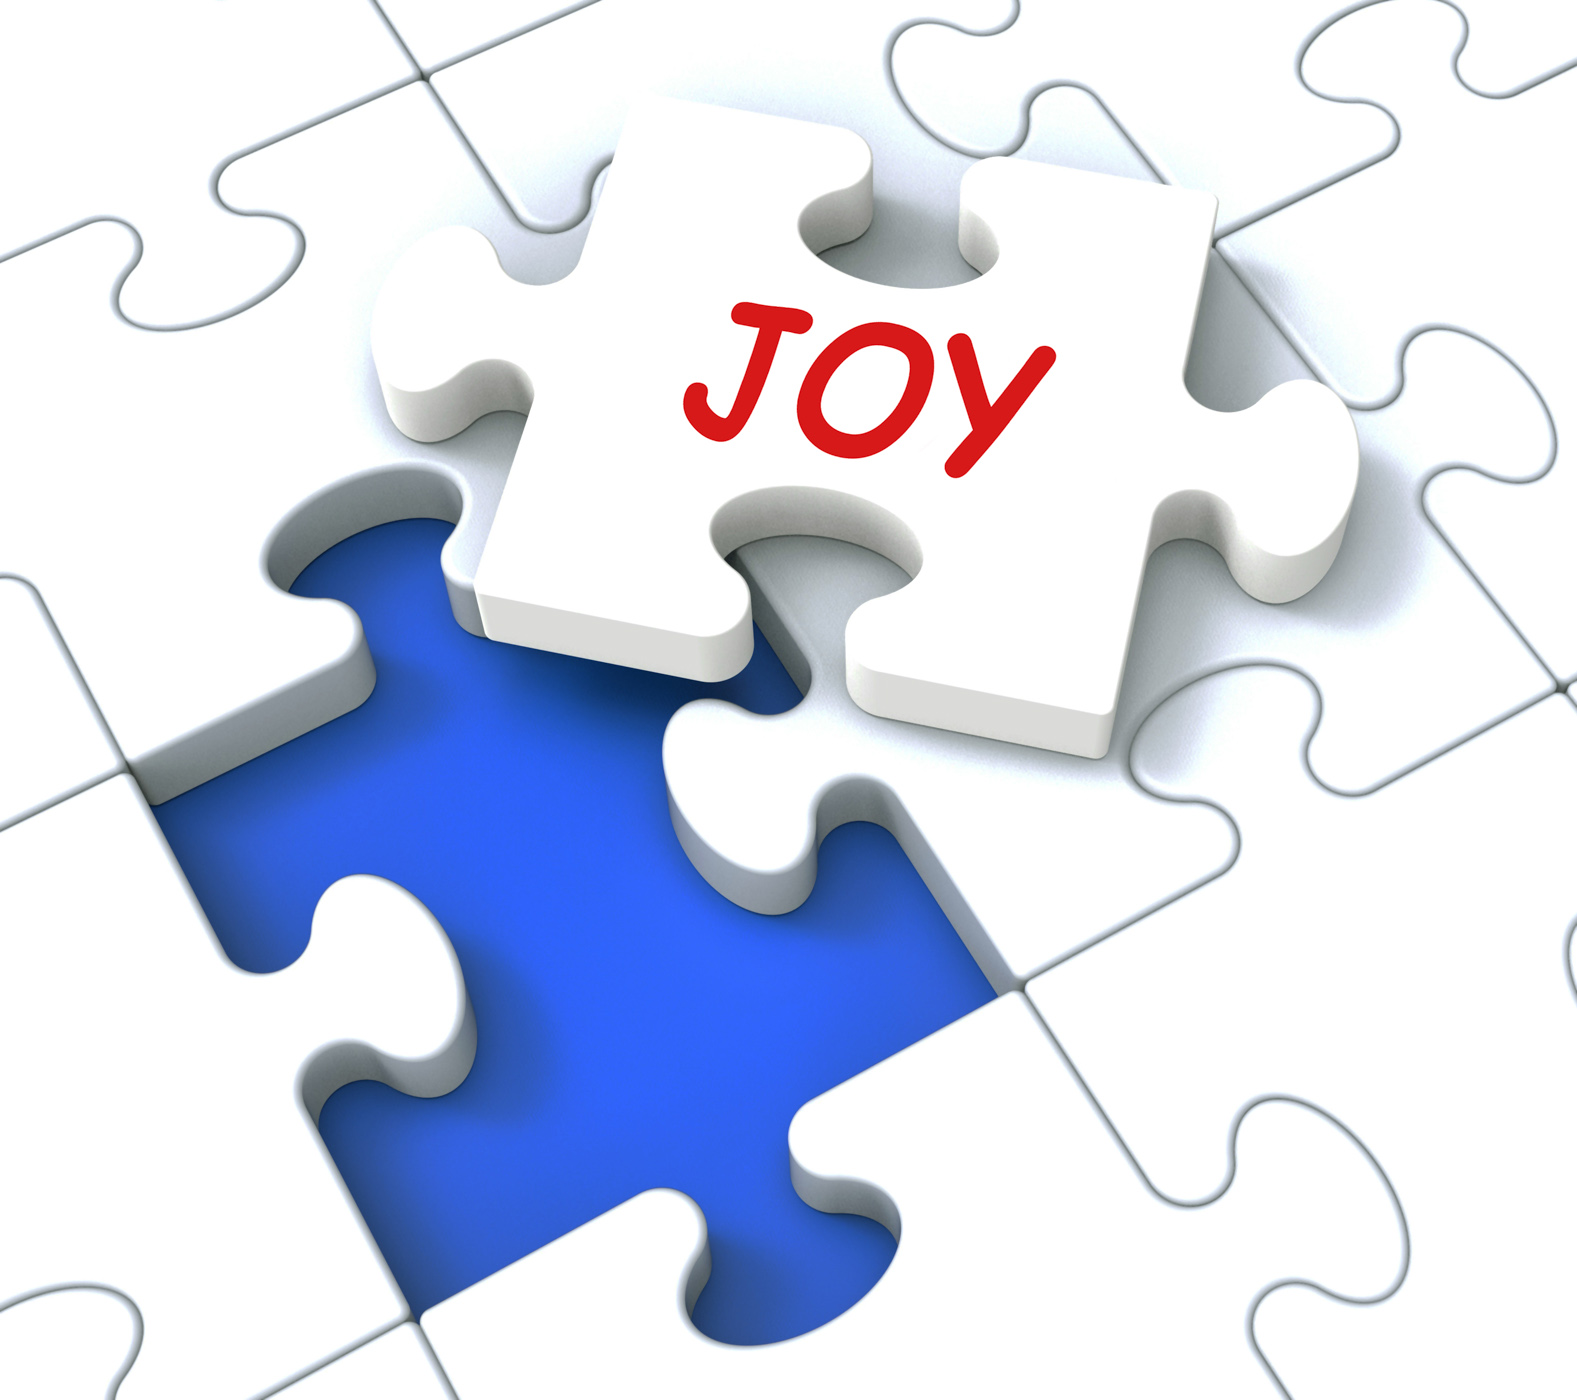 Joy puzzle shows cheerful joyful fun happy and enjoy photo